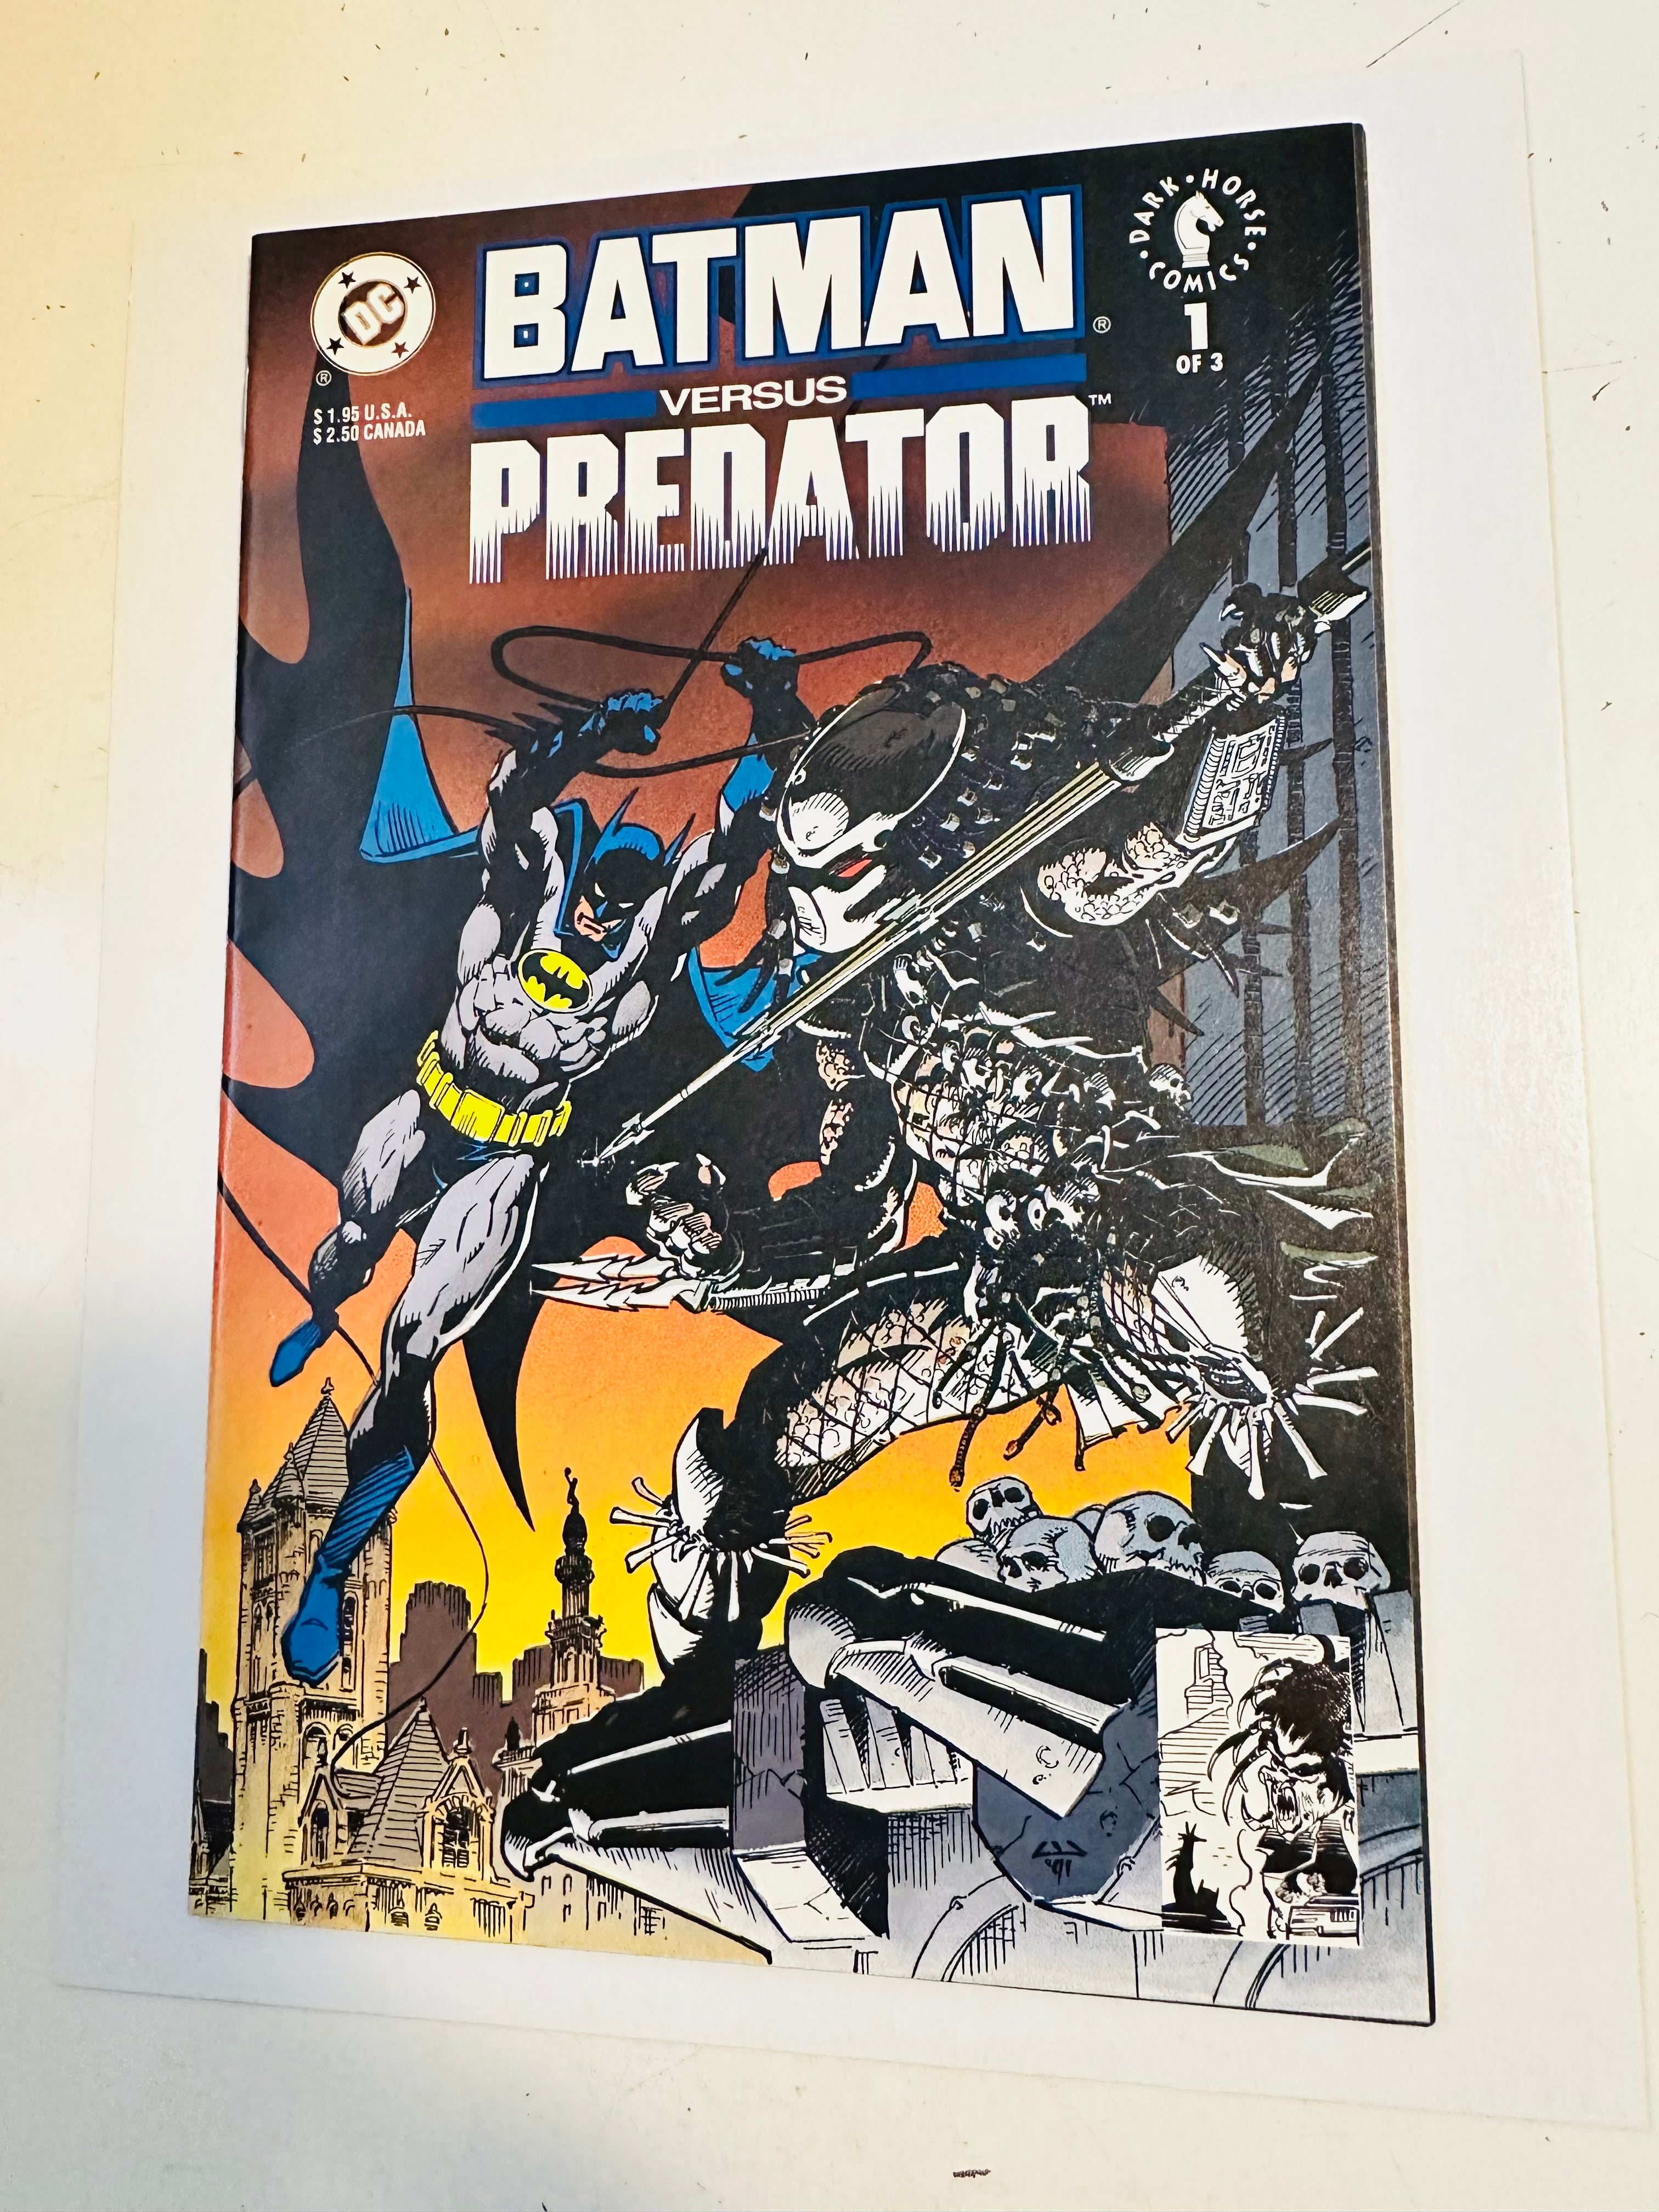 Batman versus predator first issue comic book high grade condition, 1991